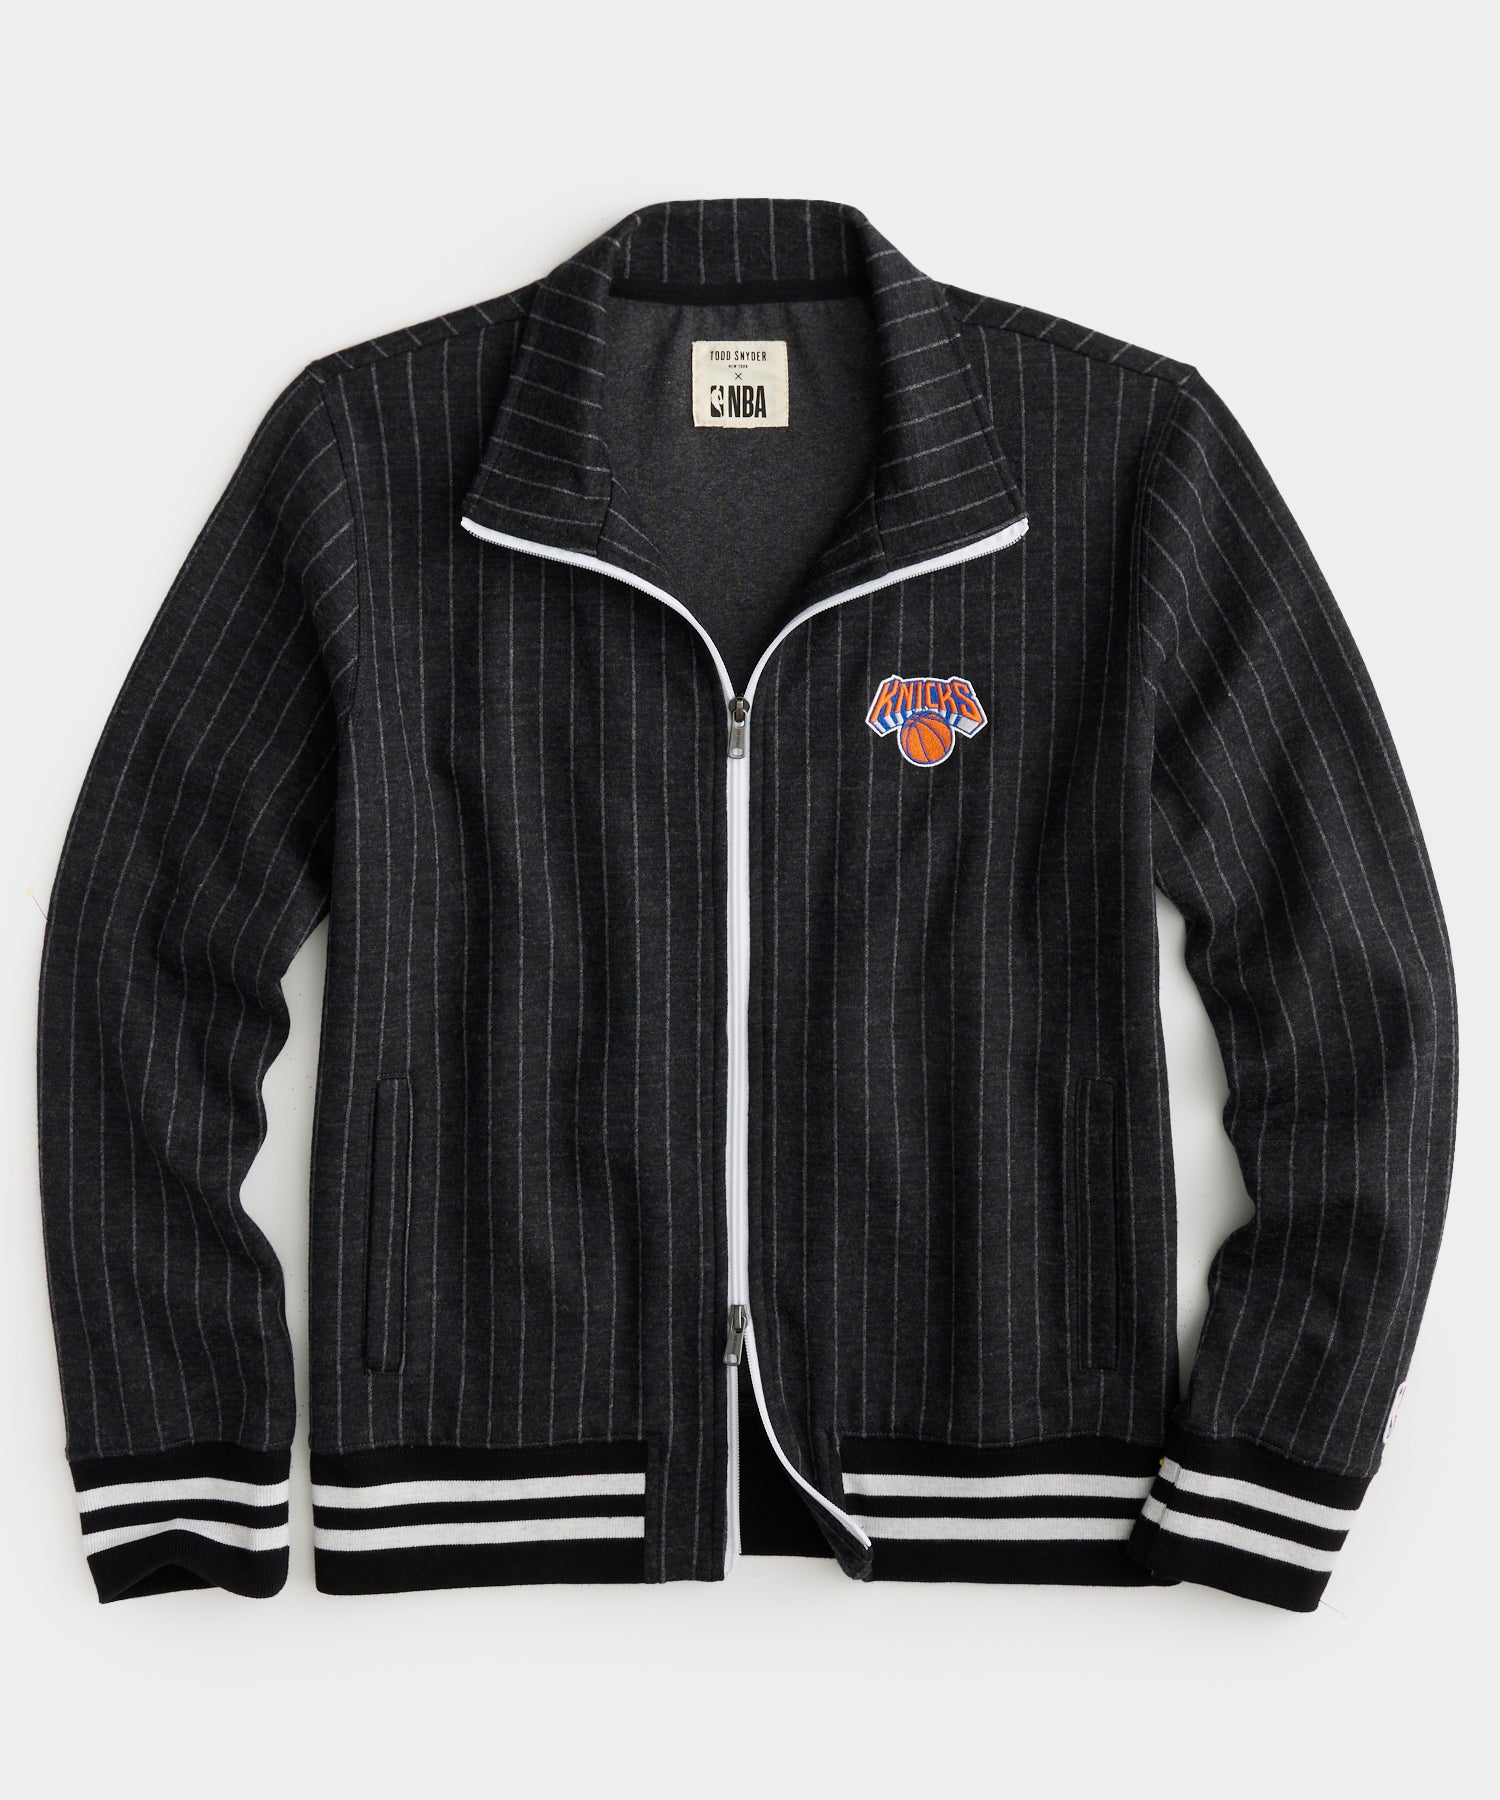 Todd Snyder x NBA Knicks Varsity Jacket